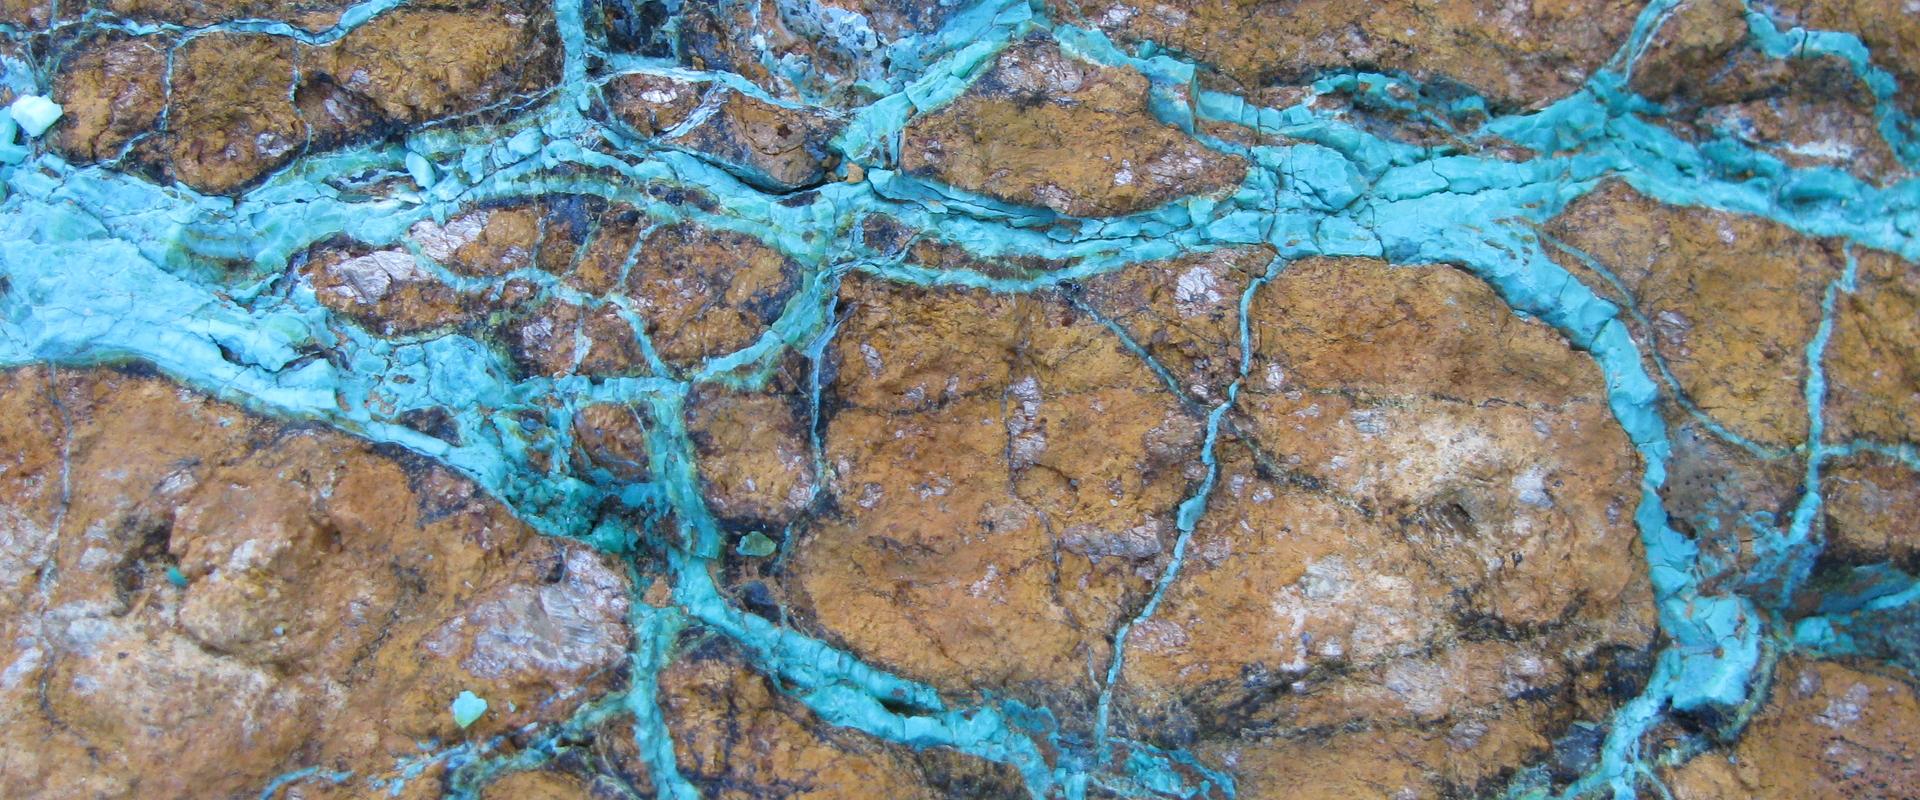 Saprolite ore with garnierite, New Caledonia